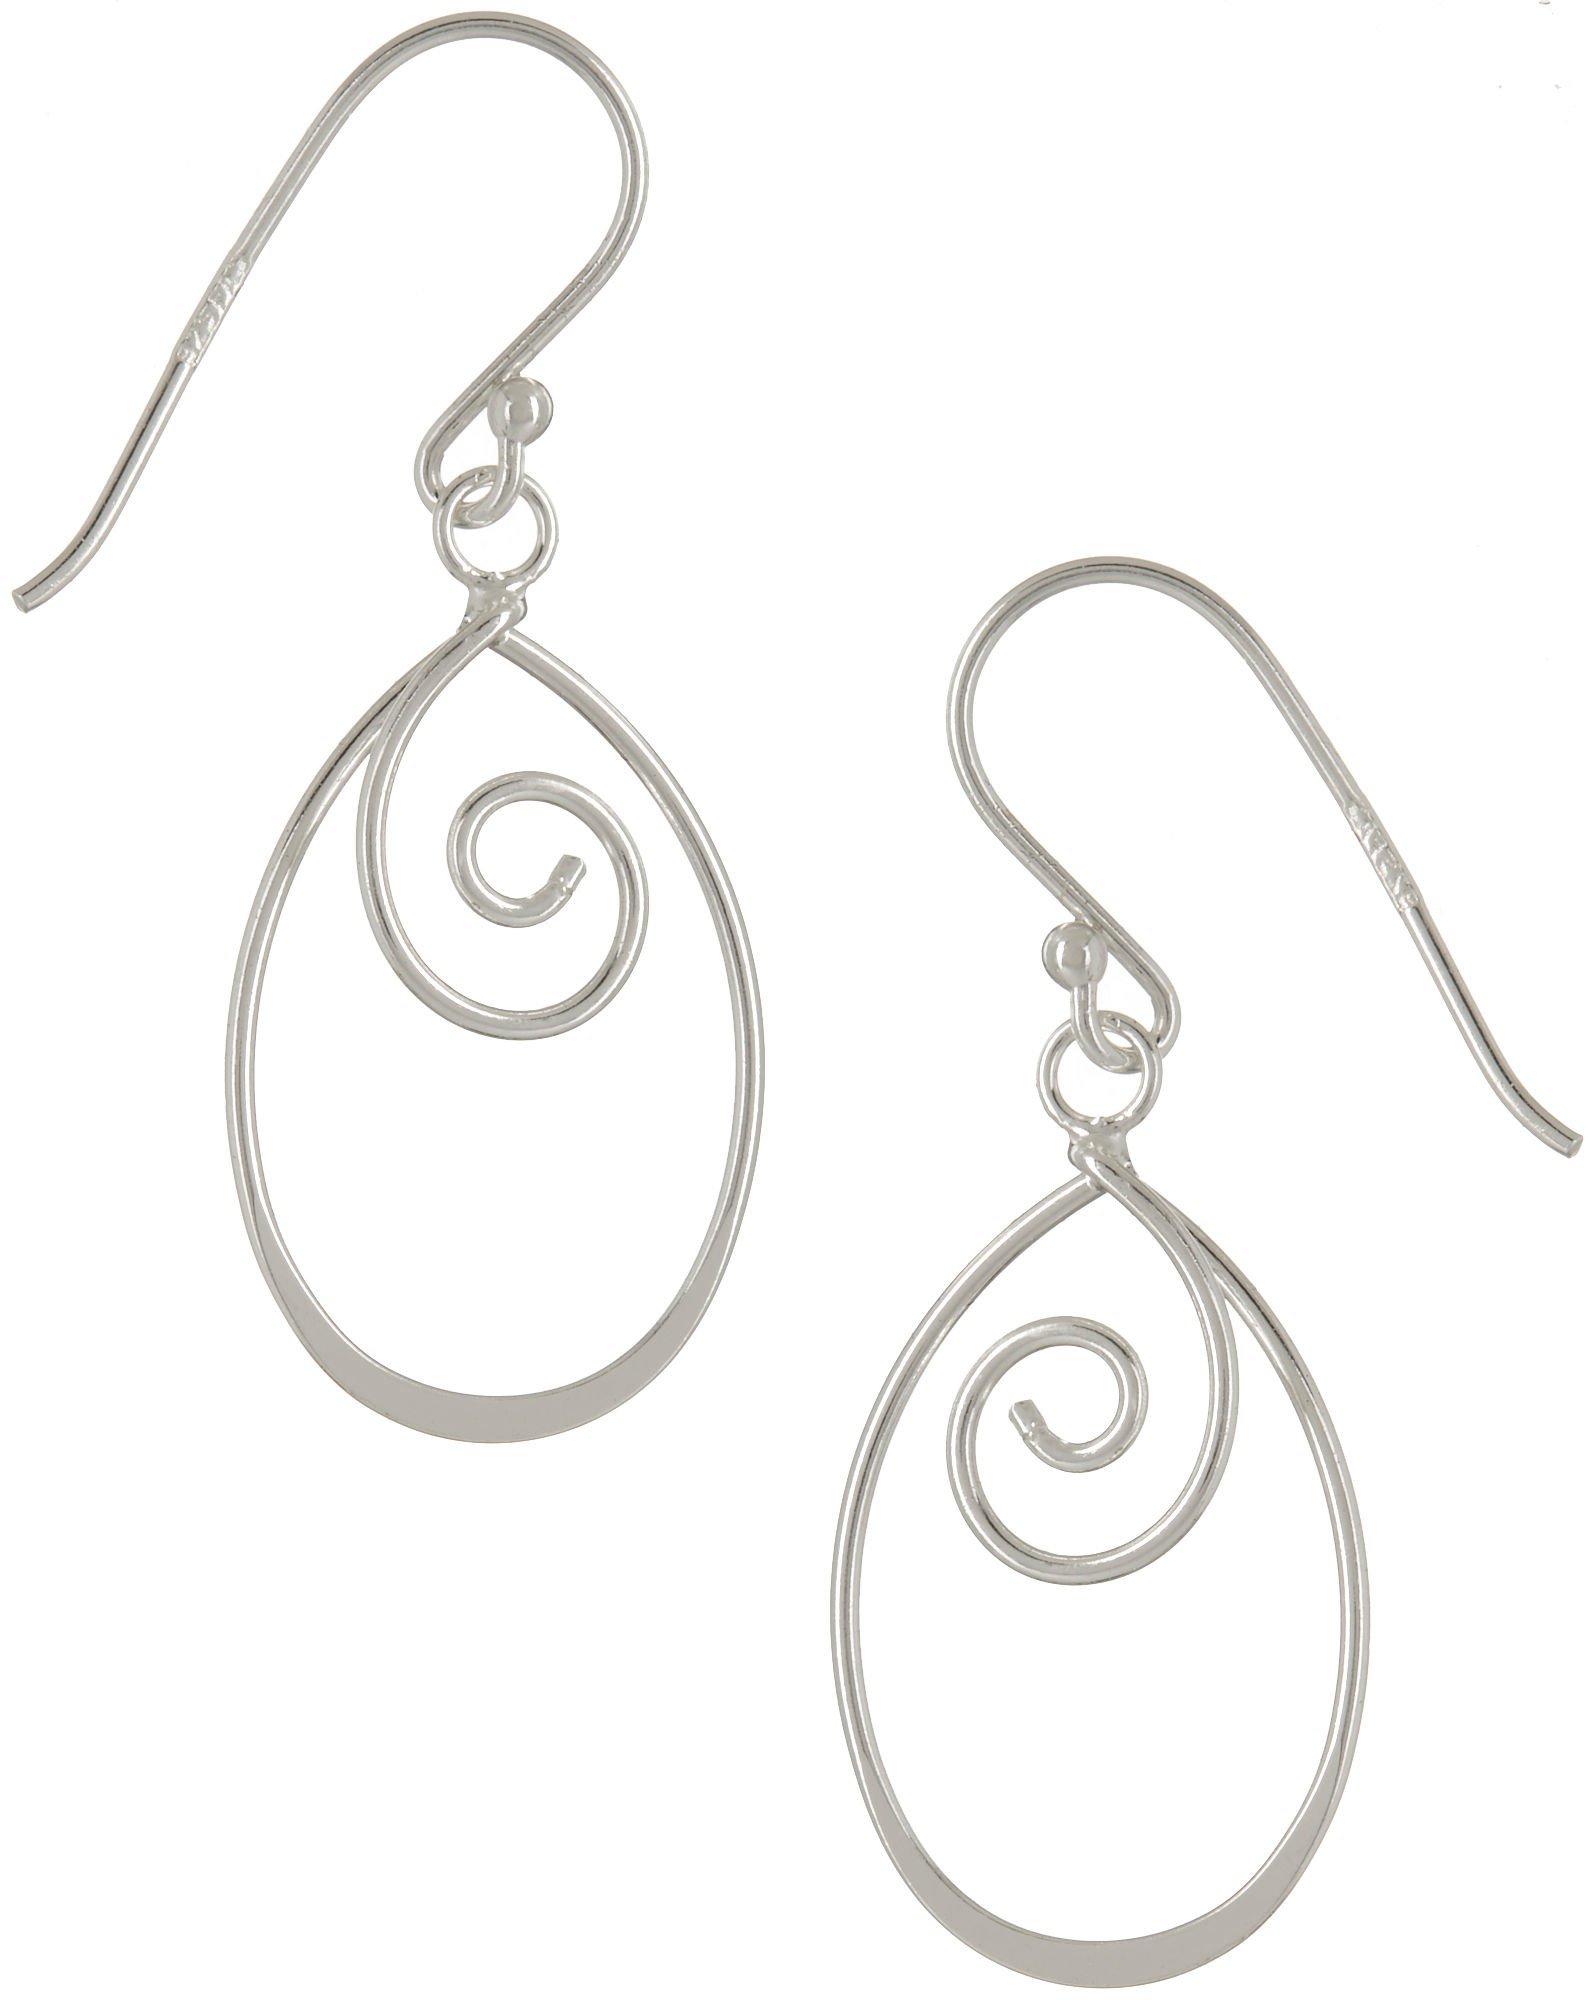 Piper & Taylor Swirled Oval Earrings